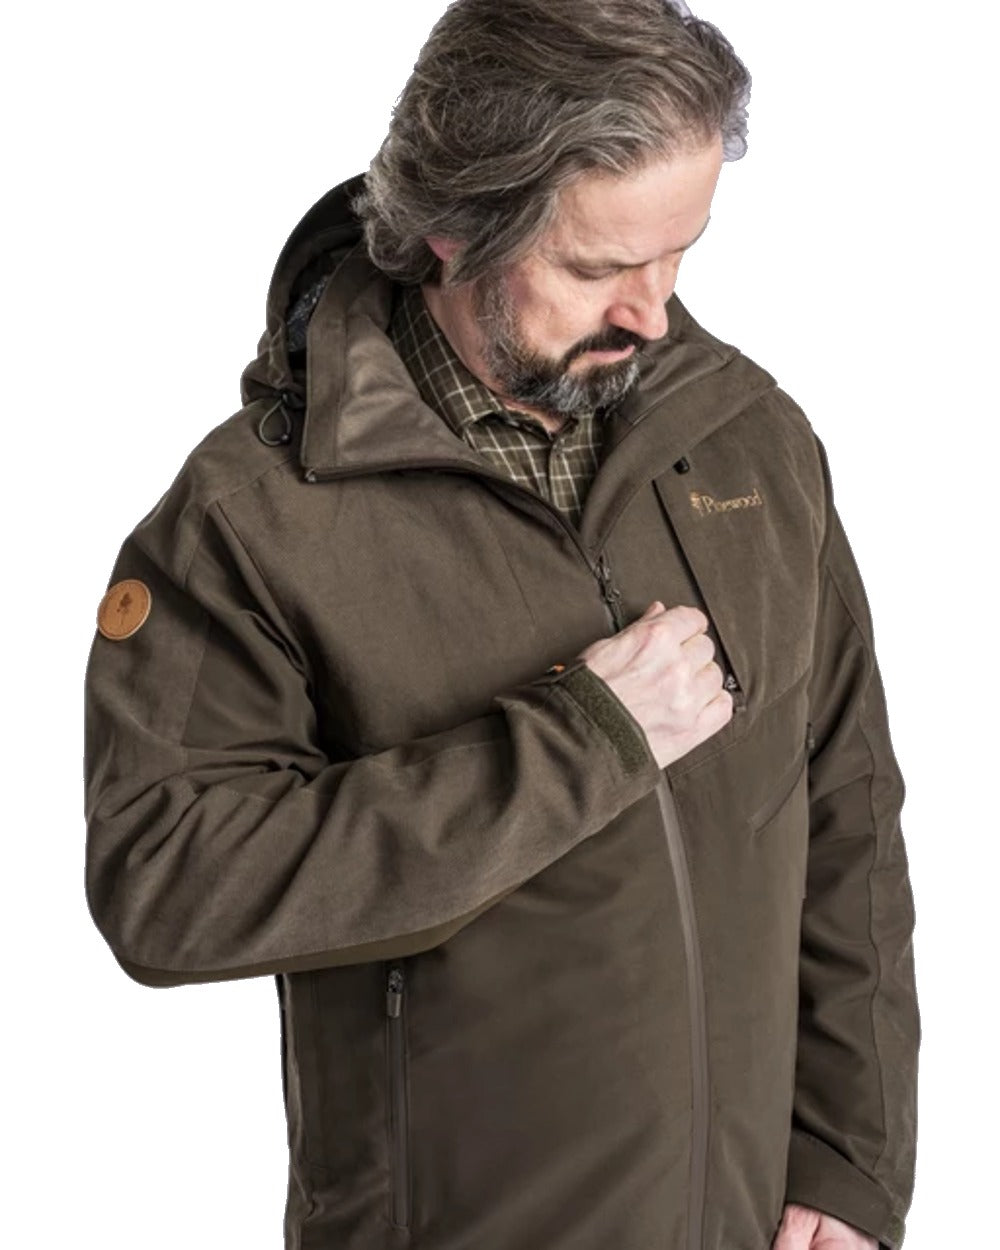 Pinewood Furudal Caribou Hunt Extreme Jacket in Suede Brown/Dark Olive